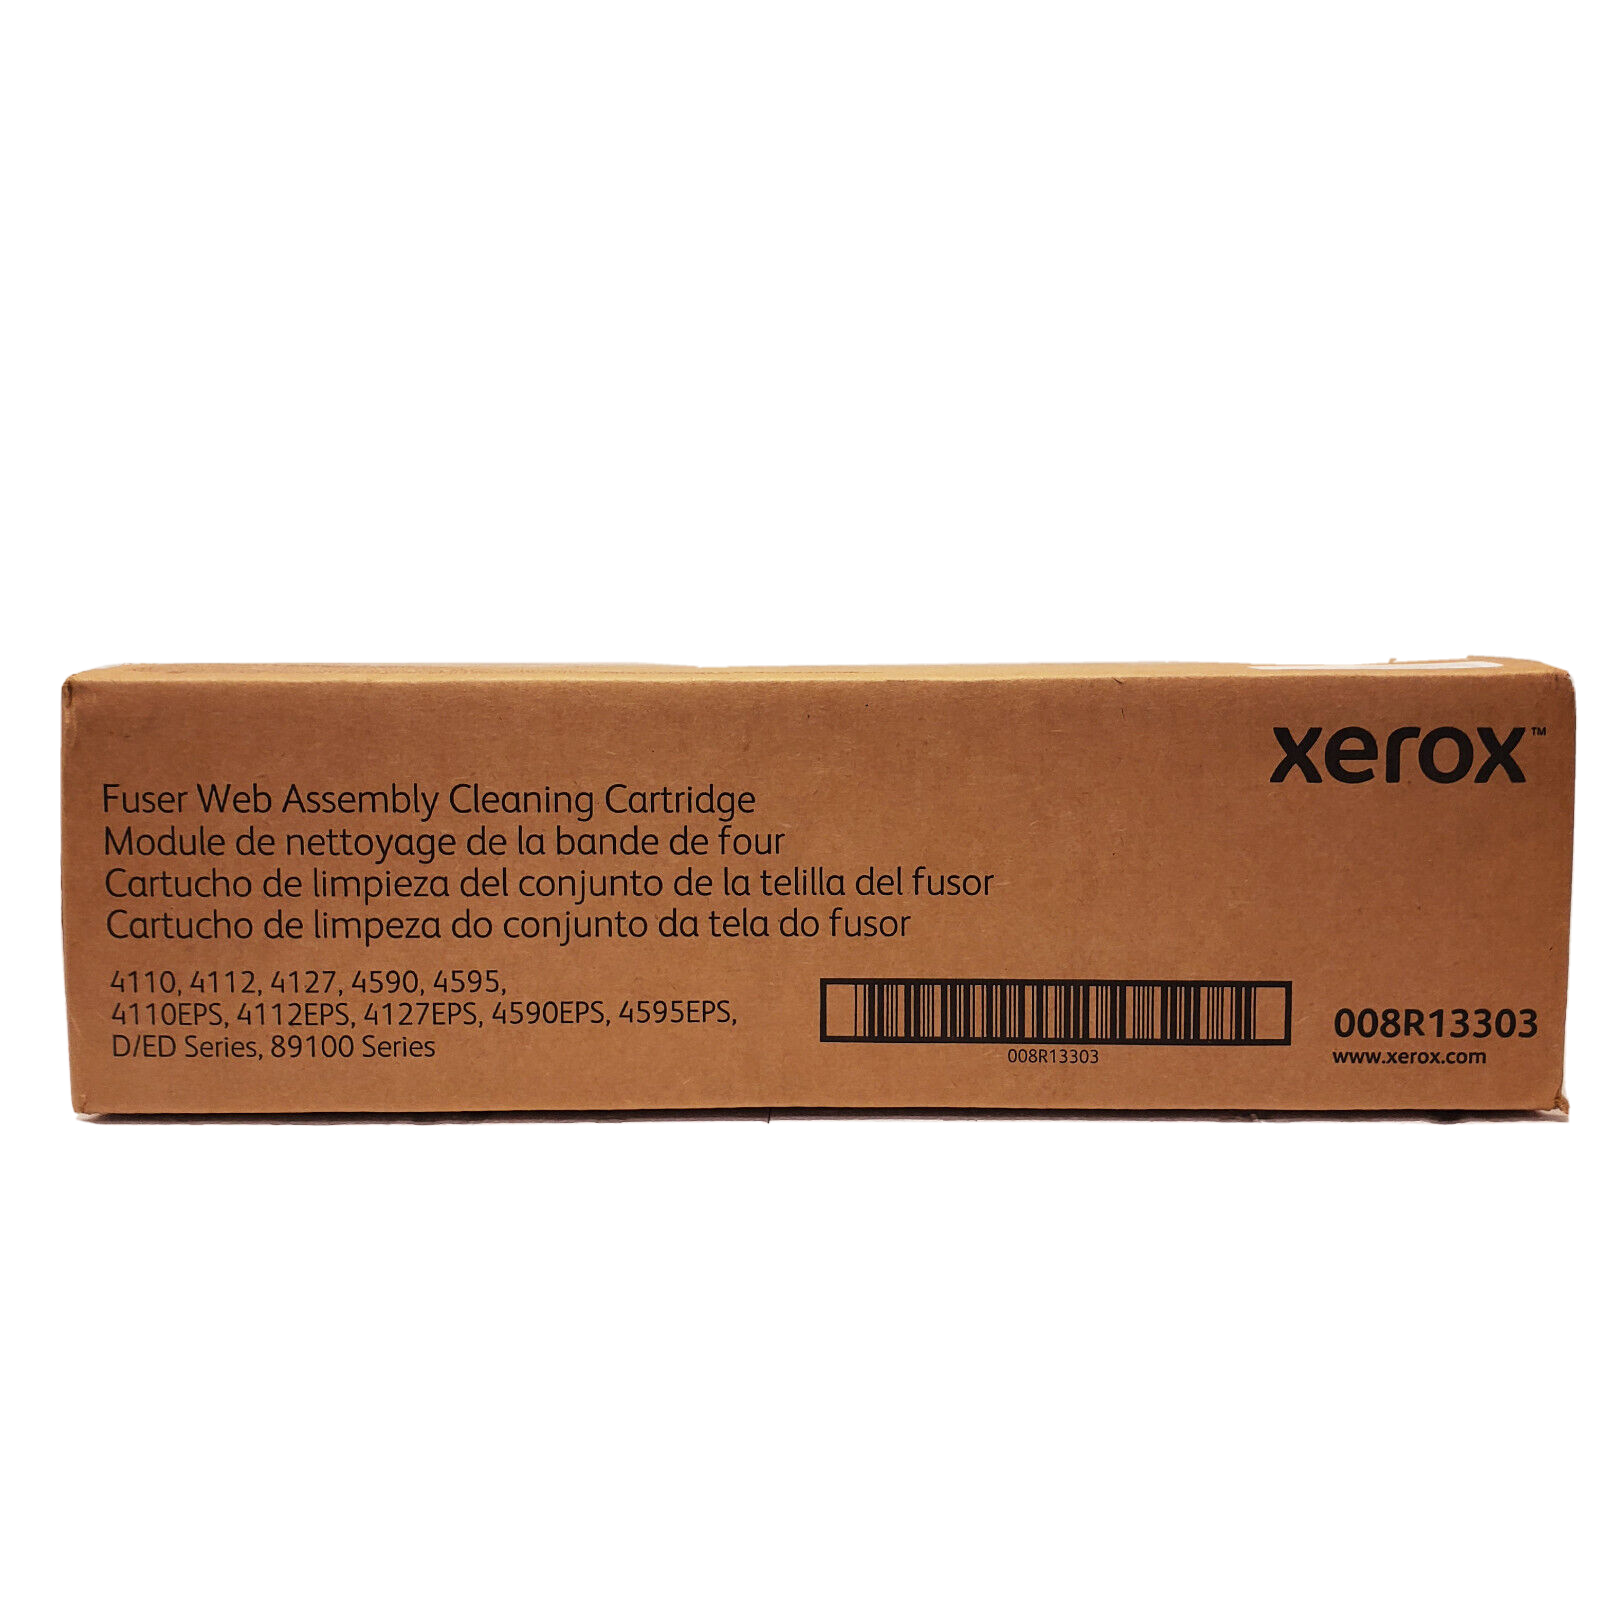 Узел очистки фьюзера Xerox оригинал для Xerox, 450000 страниц (008R13303)